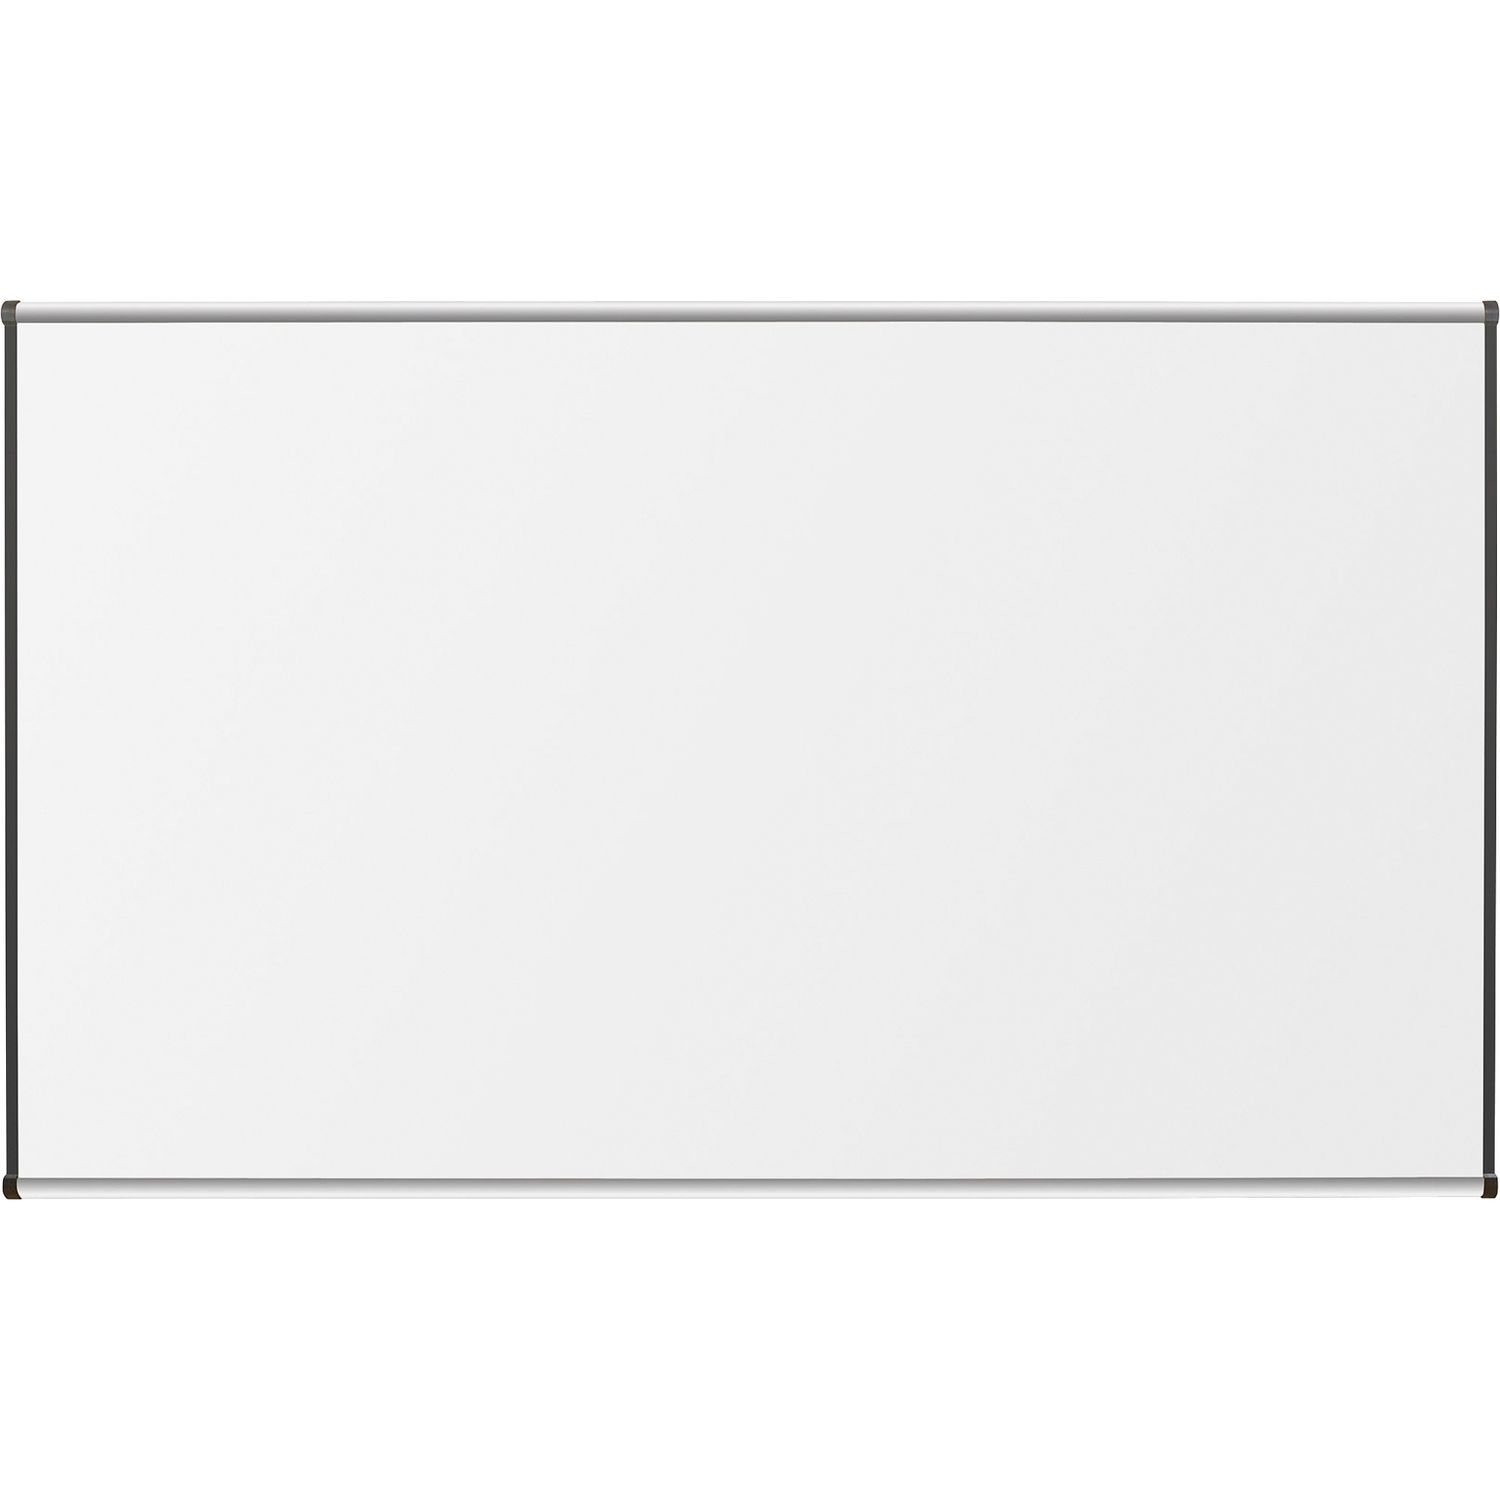 Marker Board 96" (8 ft) Width x 48" (4 ft) Height, Porcelain Enameled Steel Surface, Satin Aluminum Frame, 1 Each